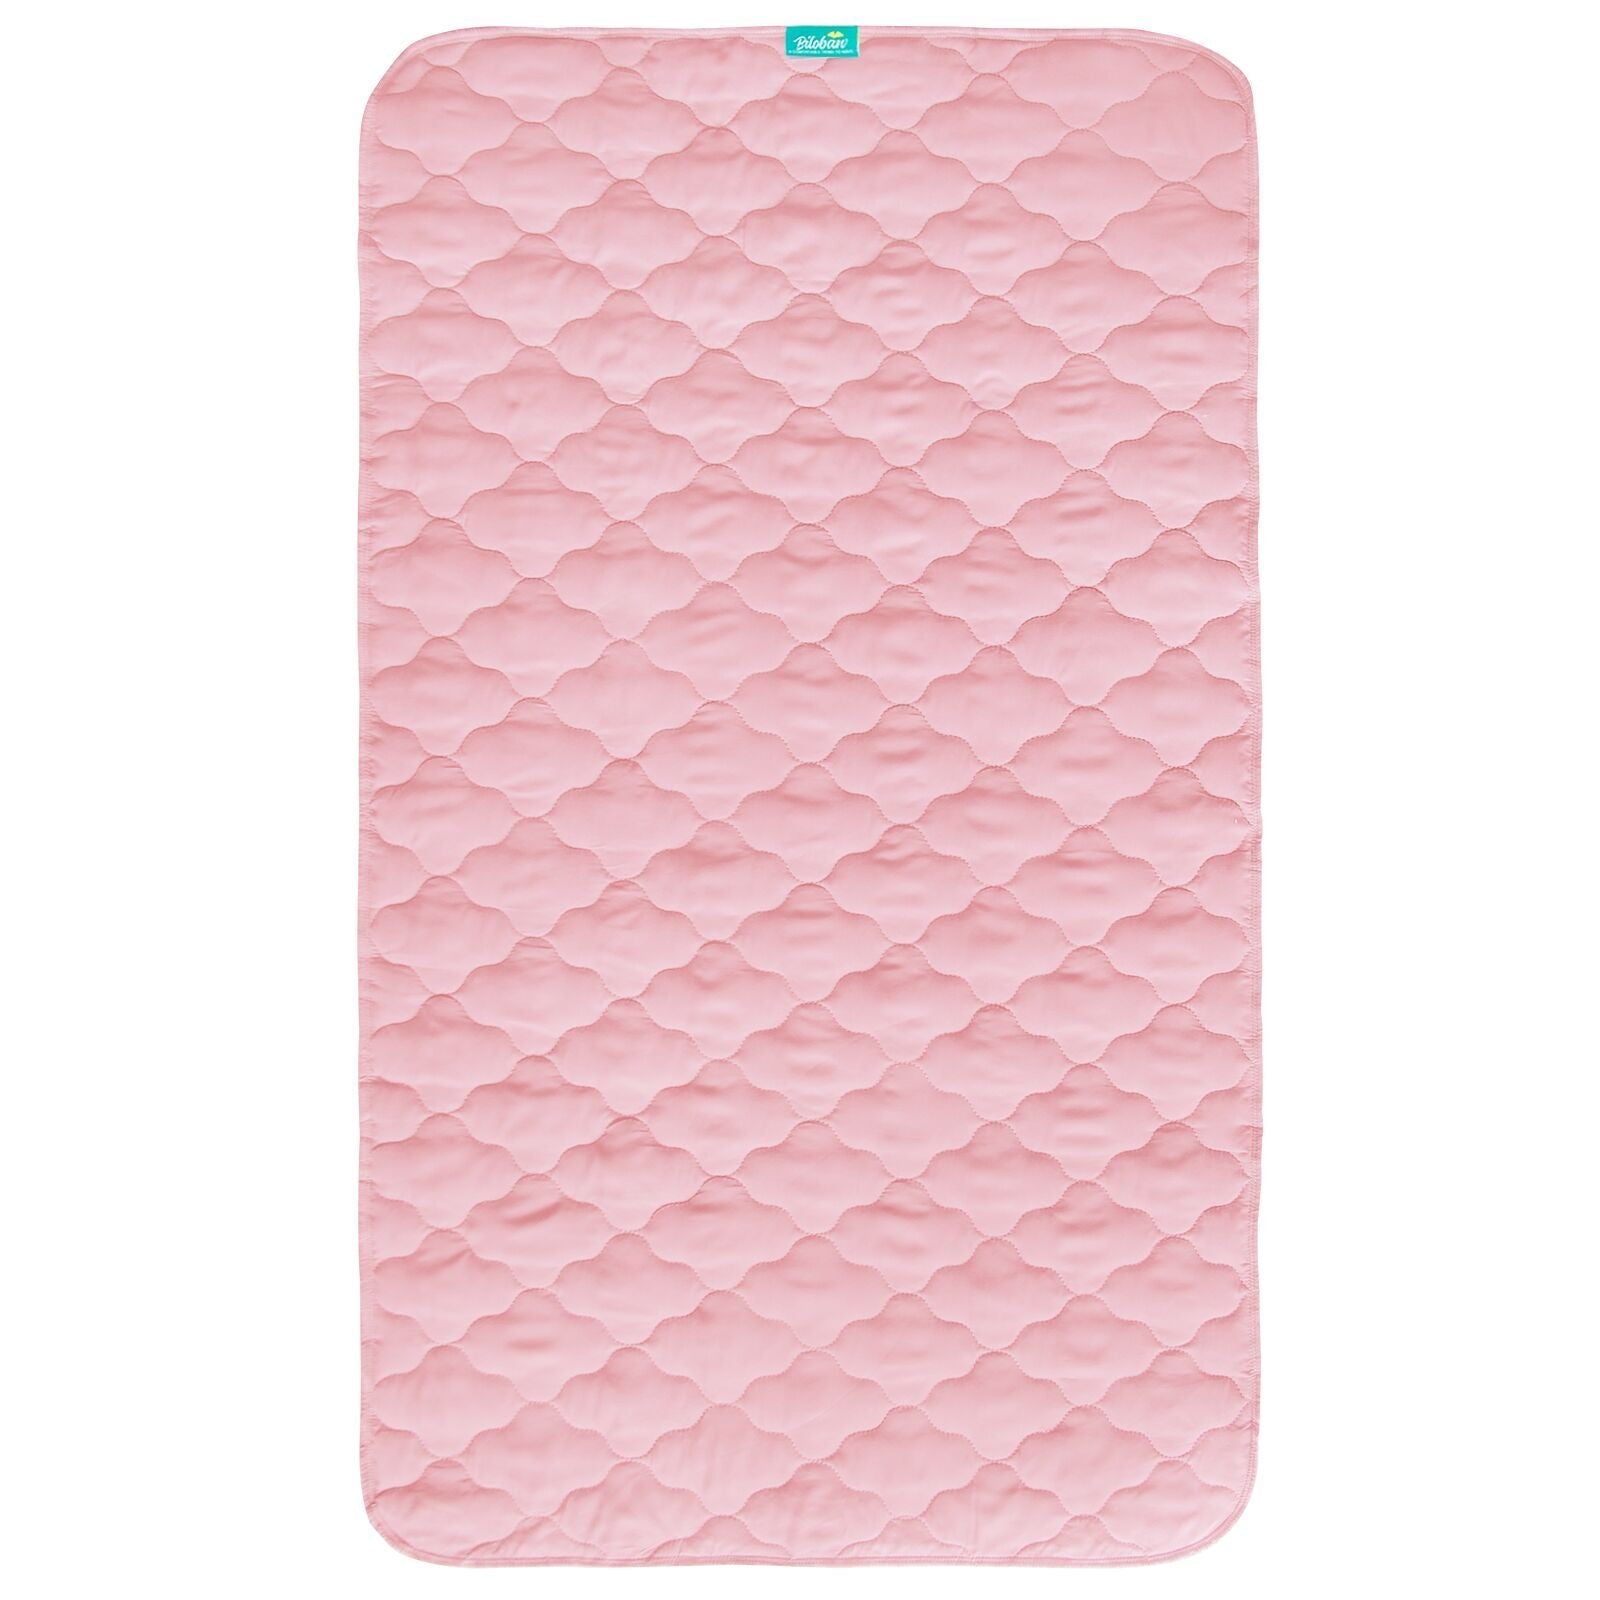 Quilted Waterproof Crib Mattress Protector Pad 52" x 28", Gray - Biloban Online Store